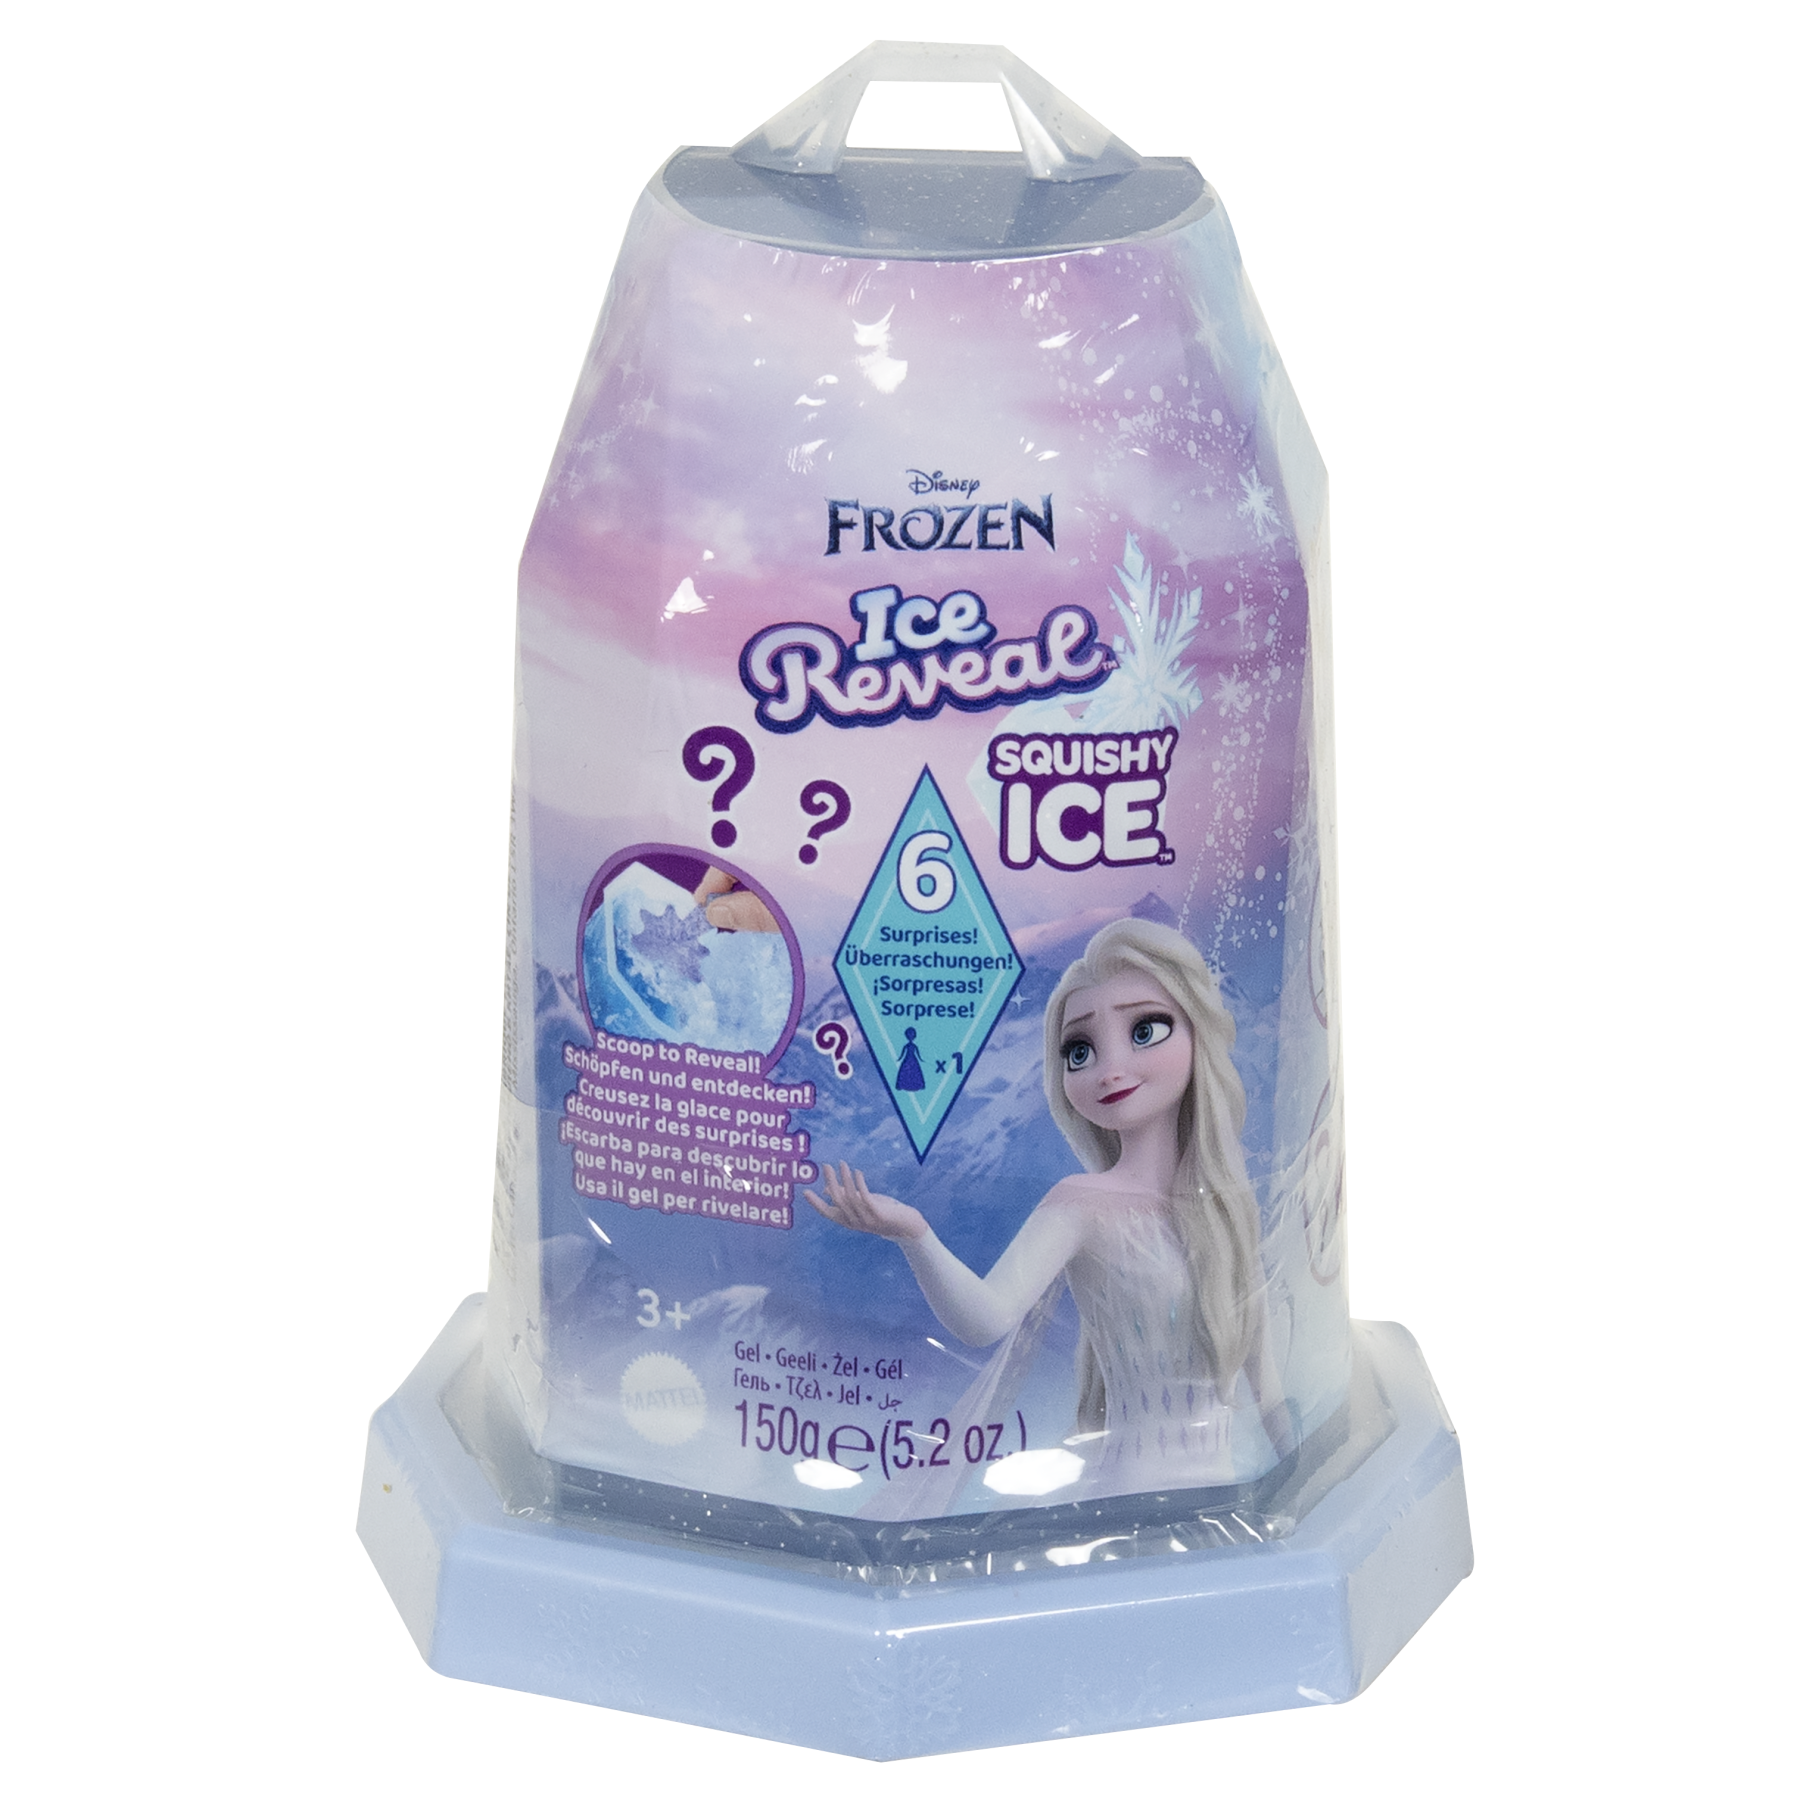 Disney frozen - mini bambole ice reveal con squishy ice assortimento - DISNEY PRINCESS, Frozen